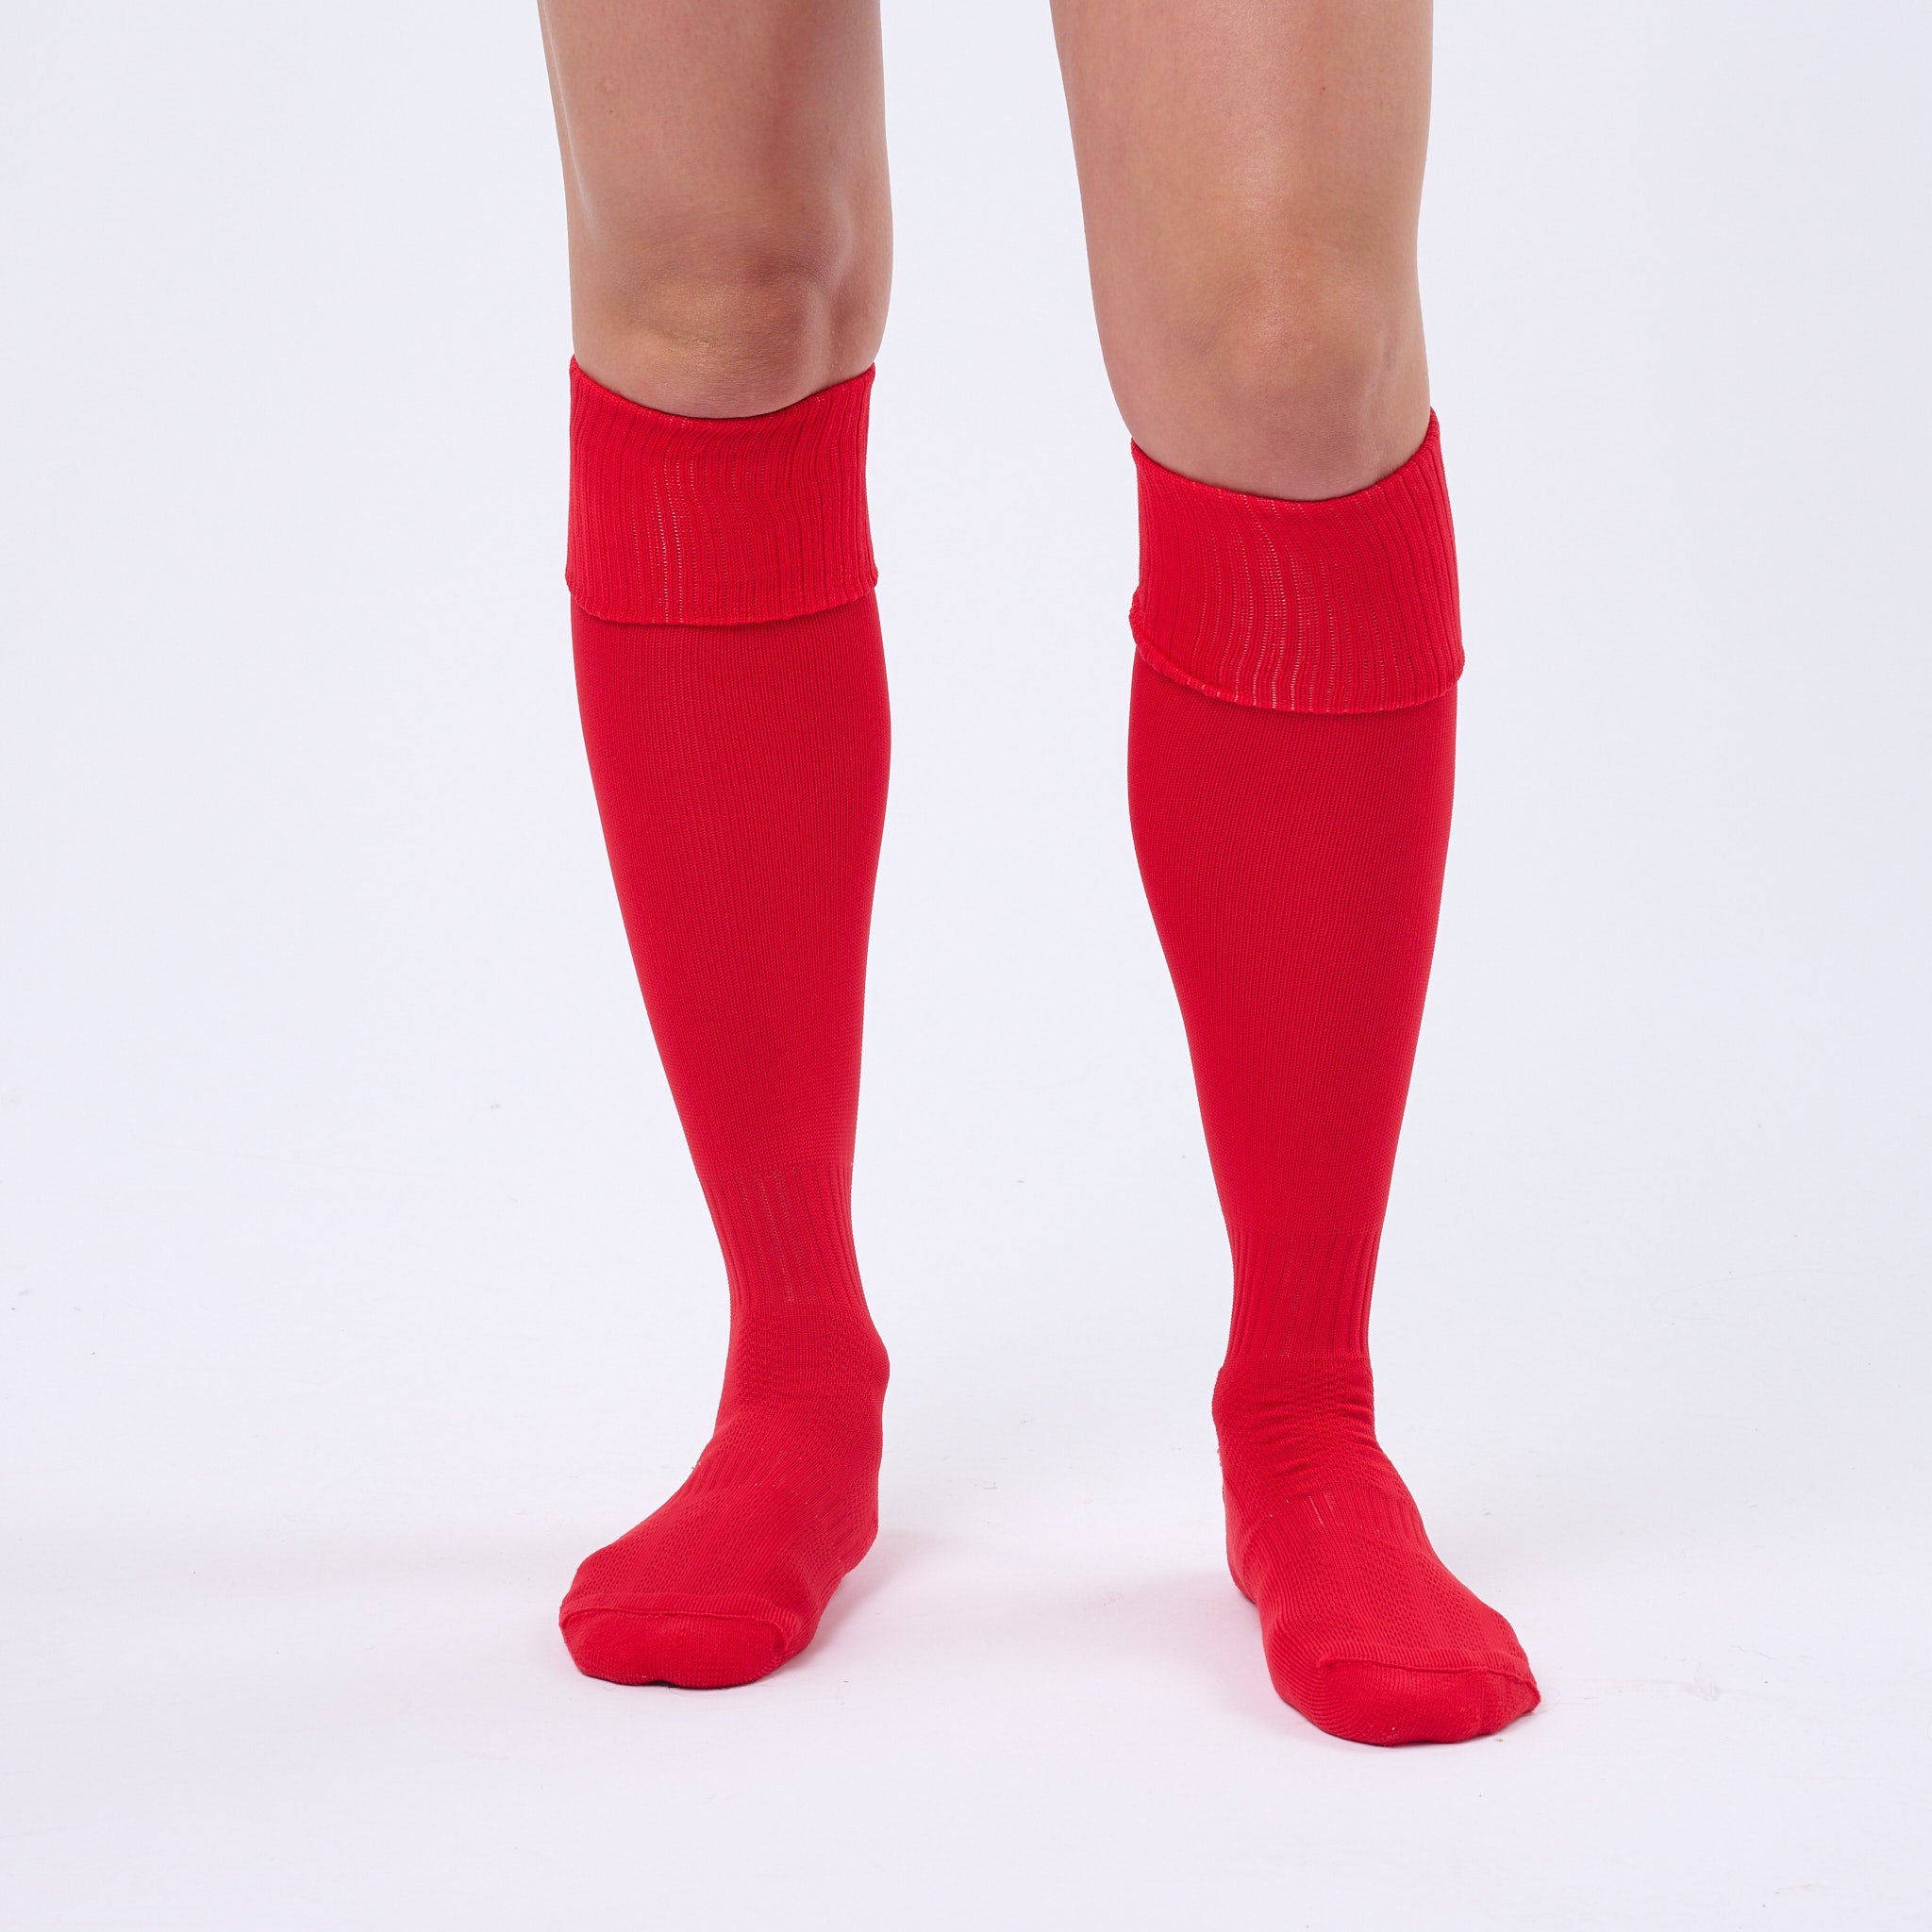 Omnitau Team Sports Core Football Playing Socks - Red